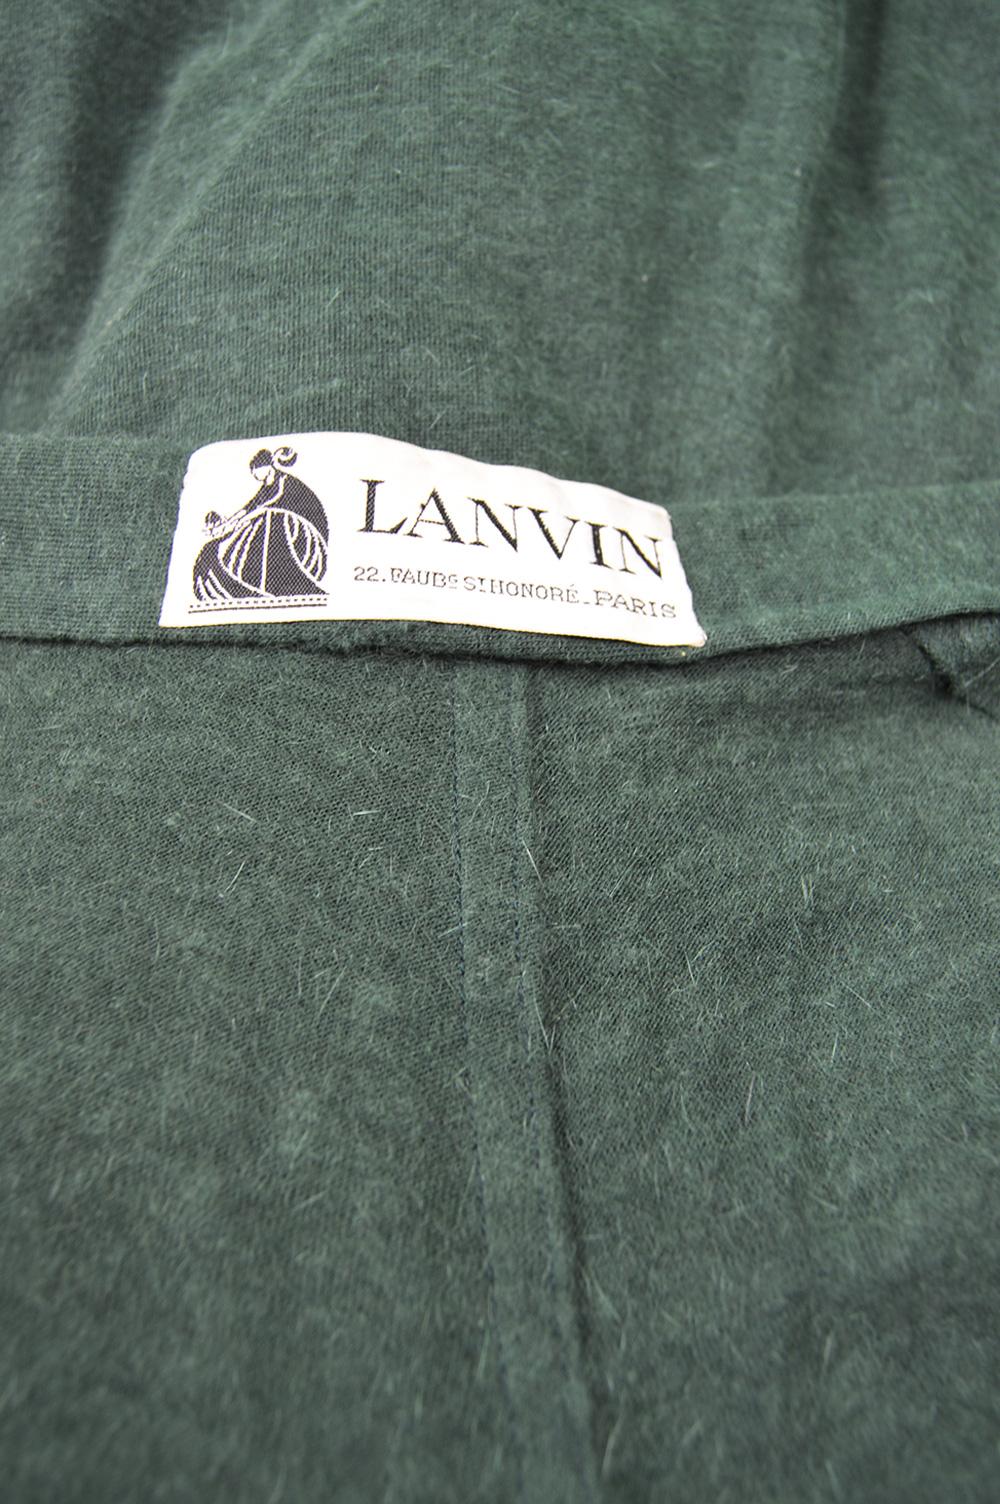 Lanvin Haute Couture Unstructured Green Wool Knit Maxi Cape Cloak, 1970s For Sale 7